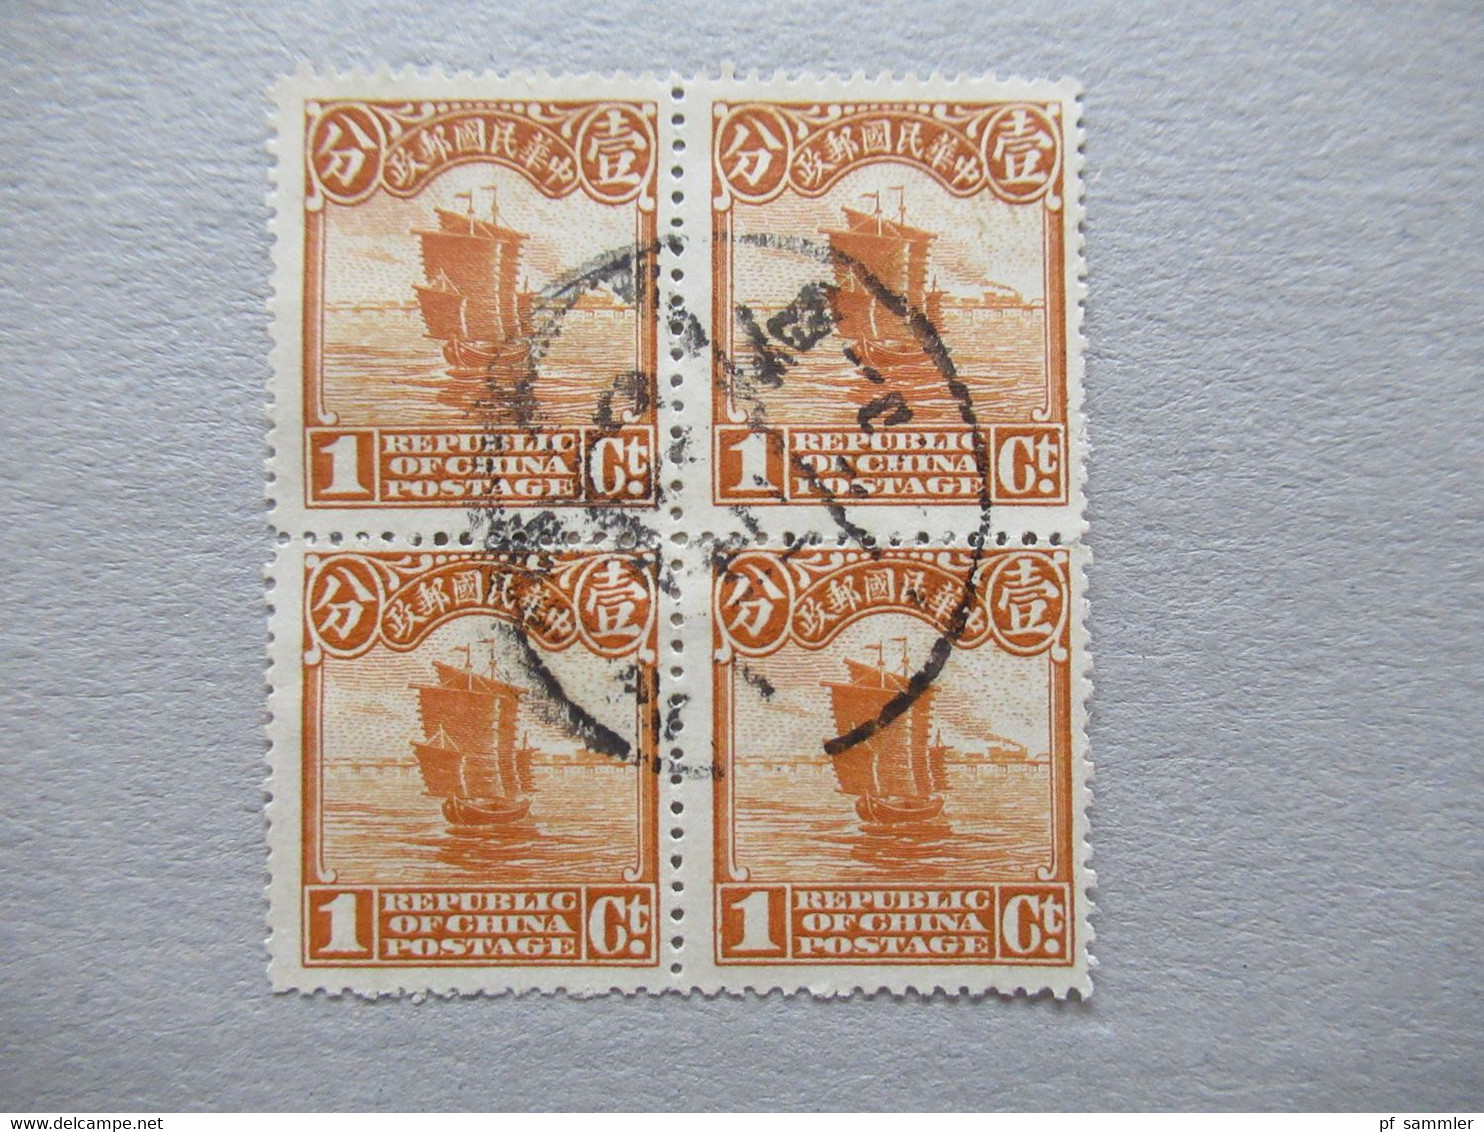 Asien China Volksrepublik Dschunke 1 Cent Im 4er Block / Gestempel 1920er Jahre - 1912-1949 Republiek